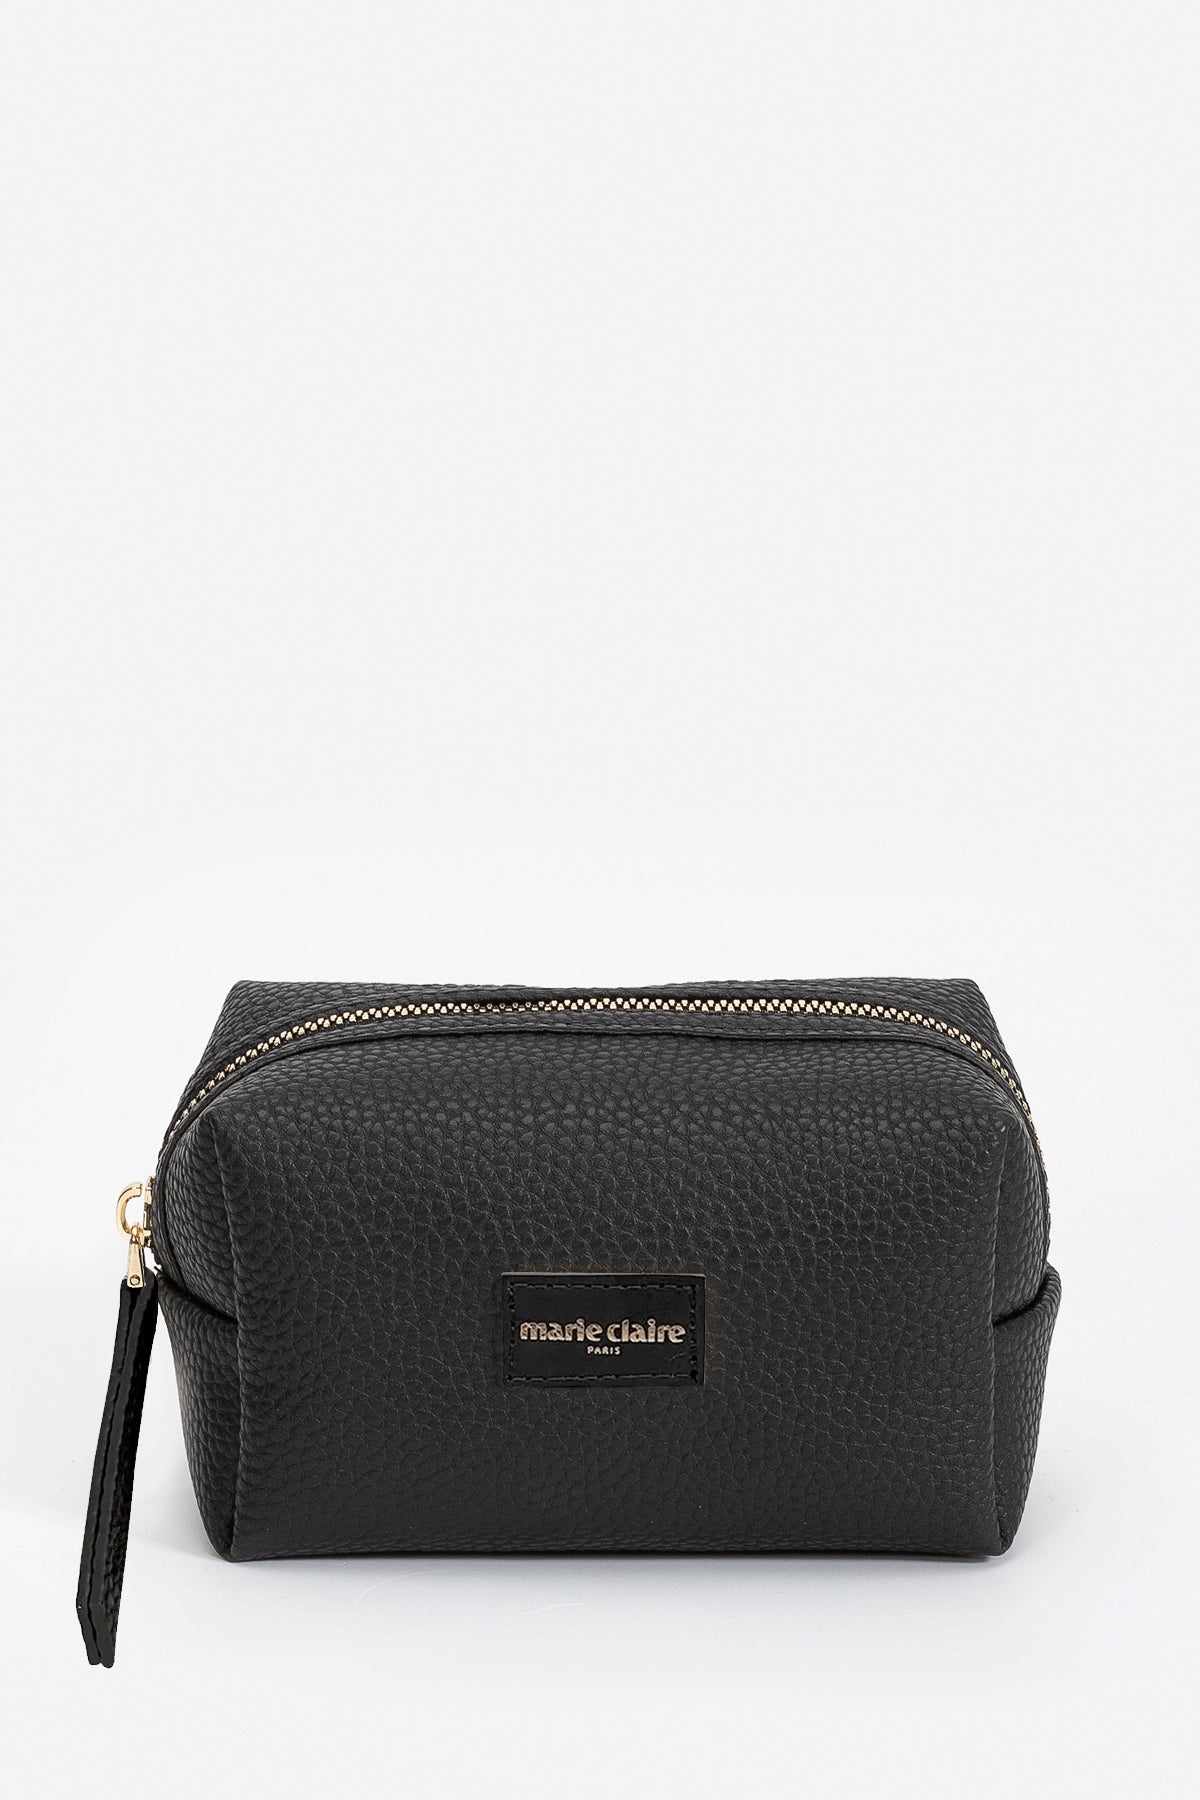 Buy NYK Women's Handbag (Cream with Tan) at Amazon.in